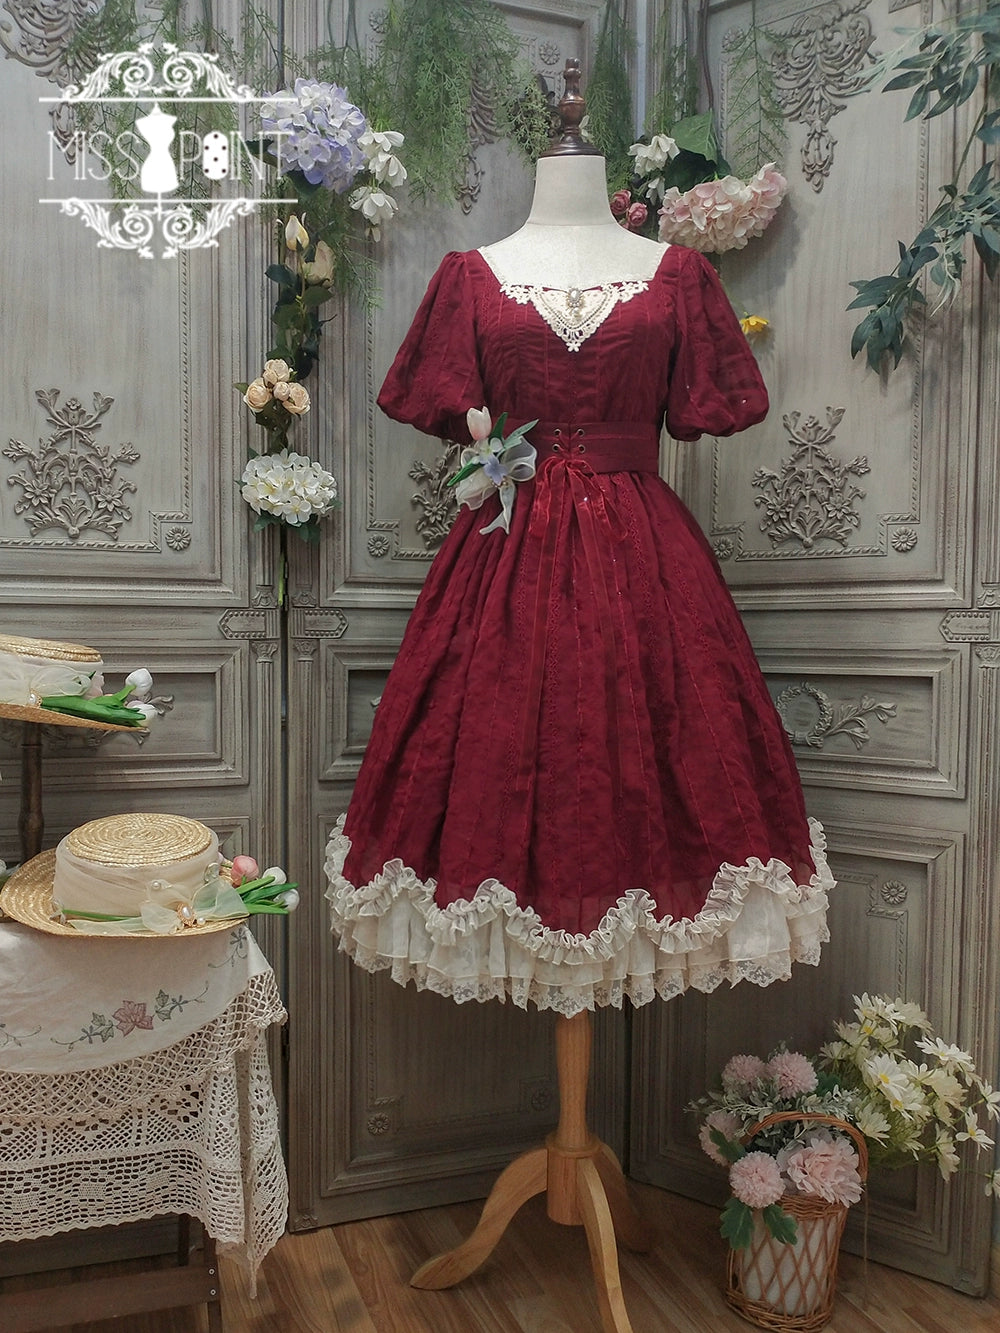 Miss Point~Tulip~Classic Lolita OP Dress Short Sleeve Dress Multicolors XS Wine red 